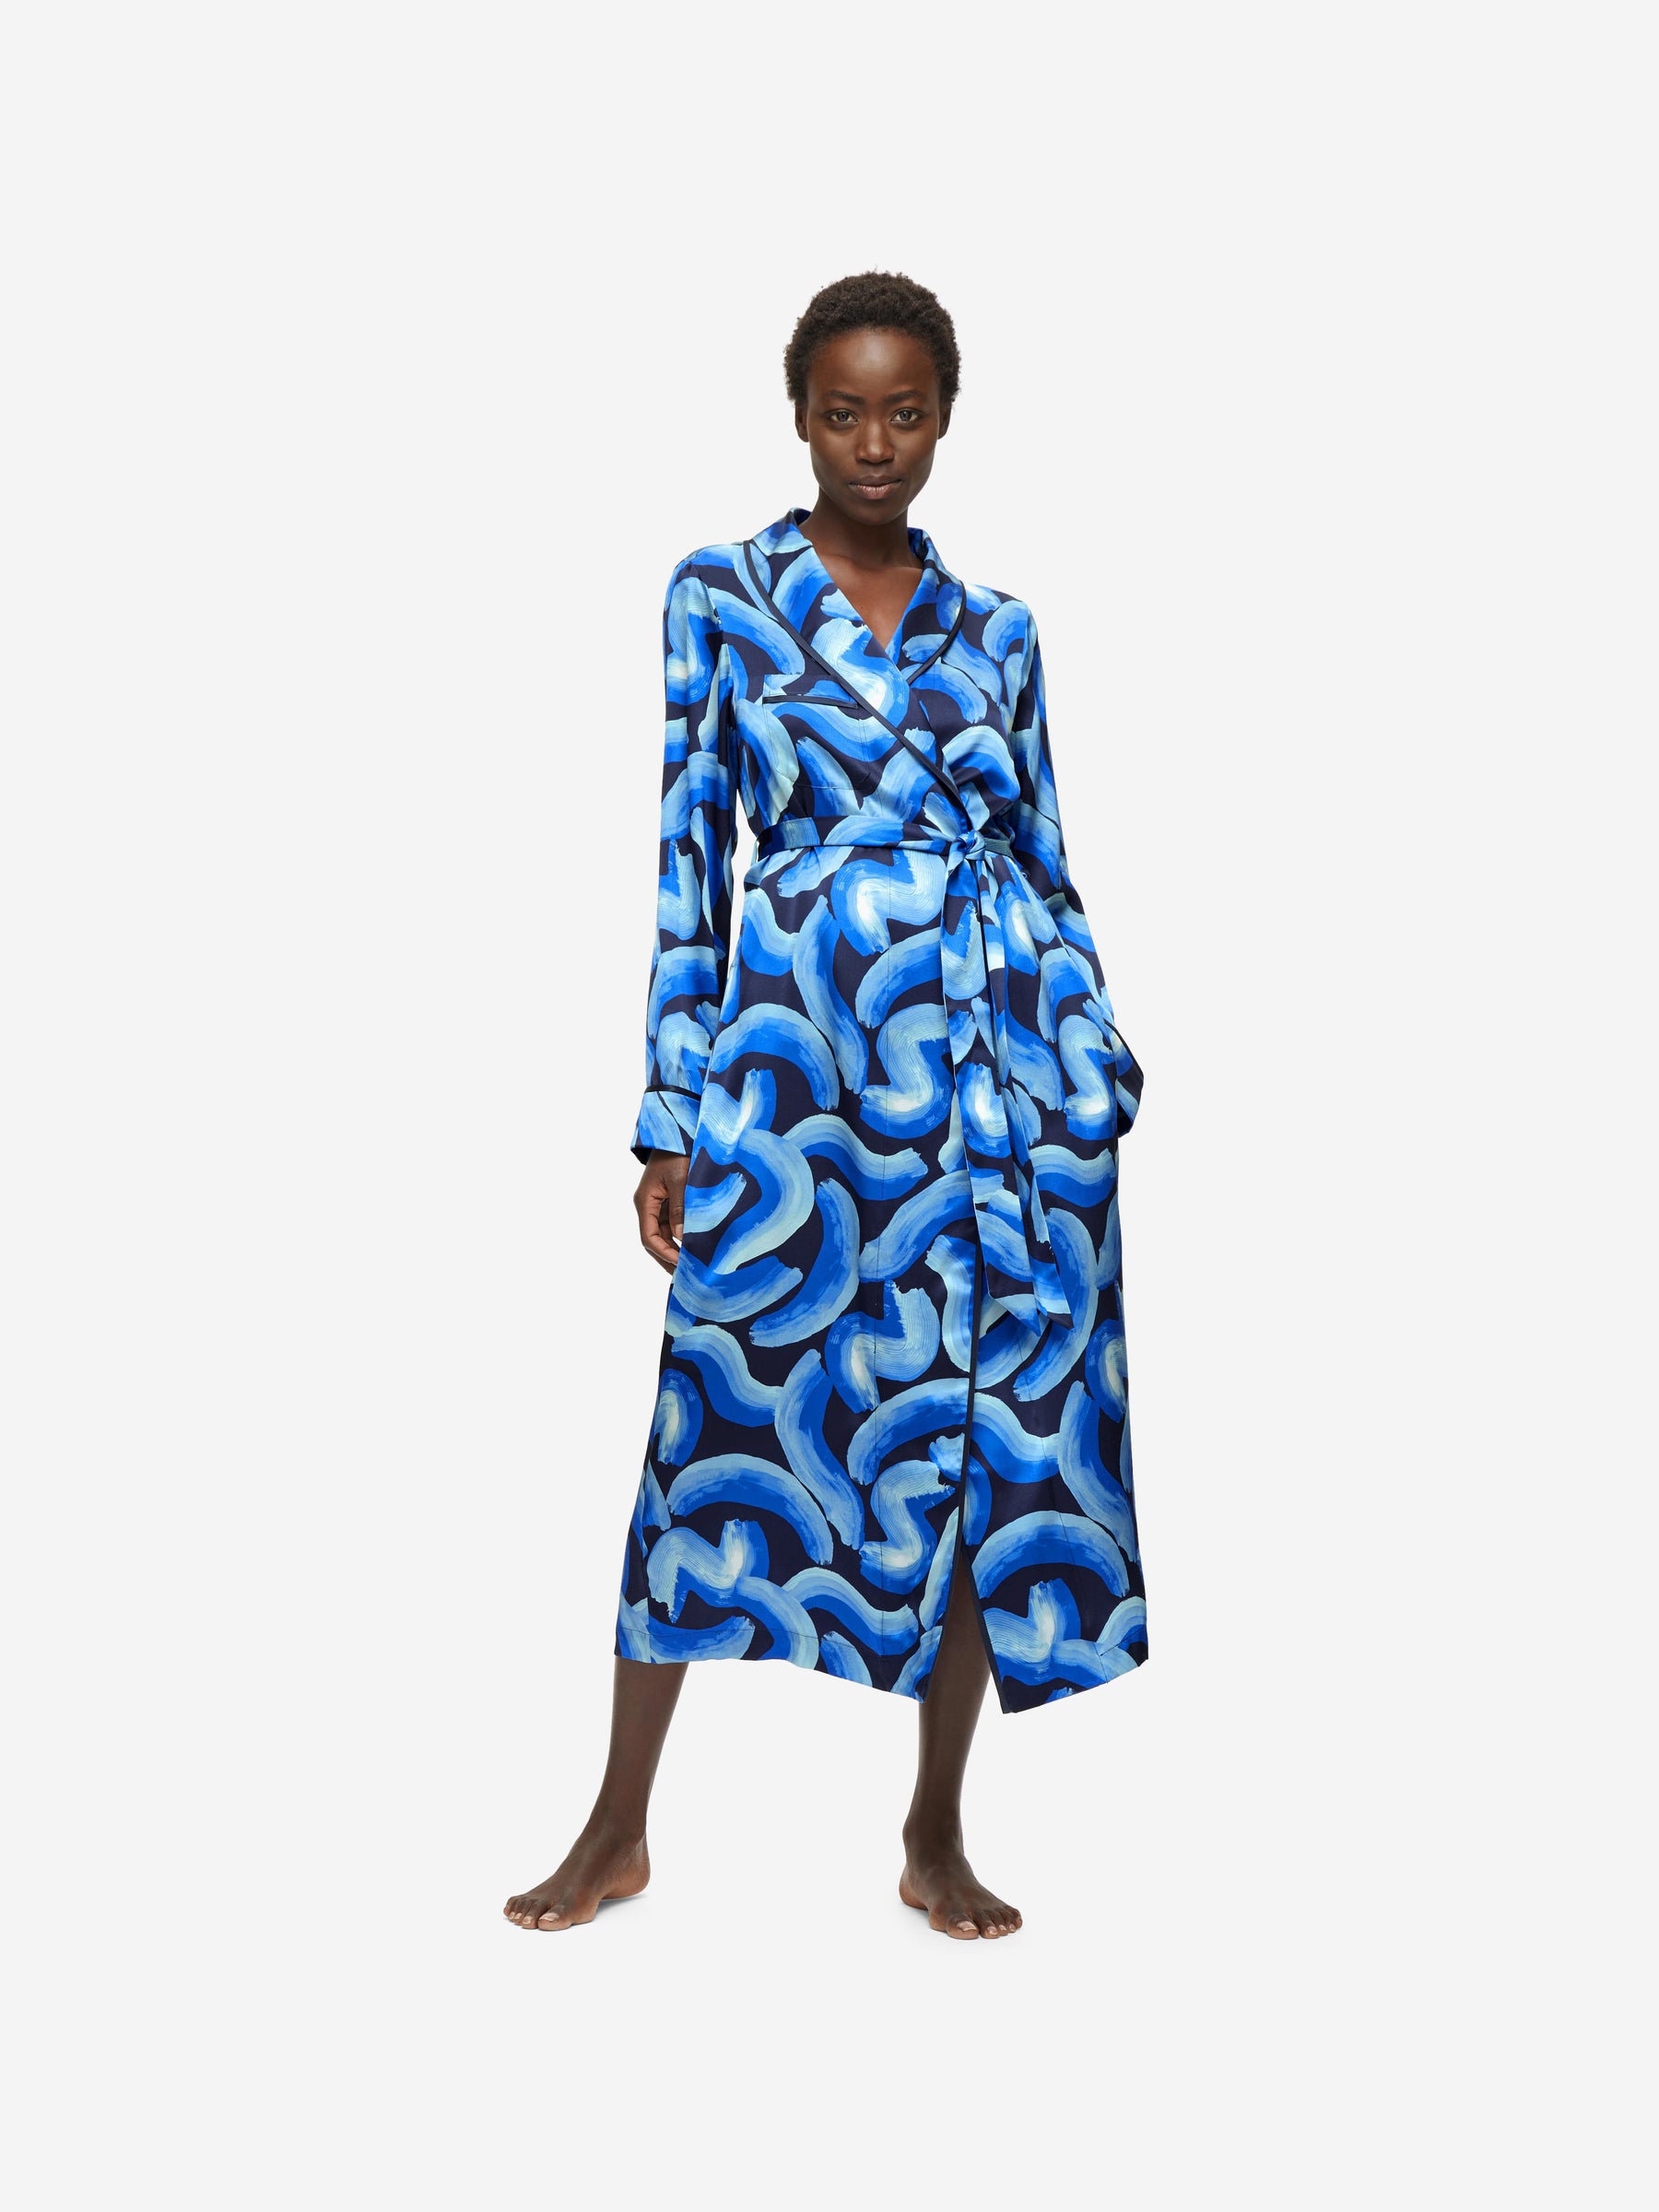 Women's Long Dressing Gown Brindisi 82 Silk Satin Blue